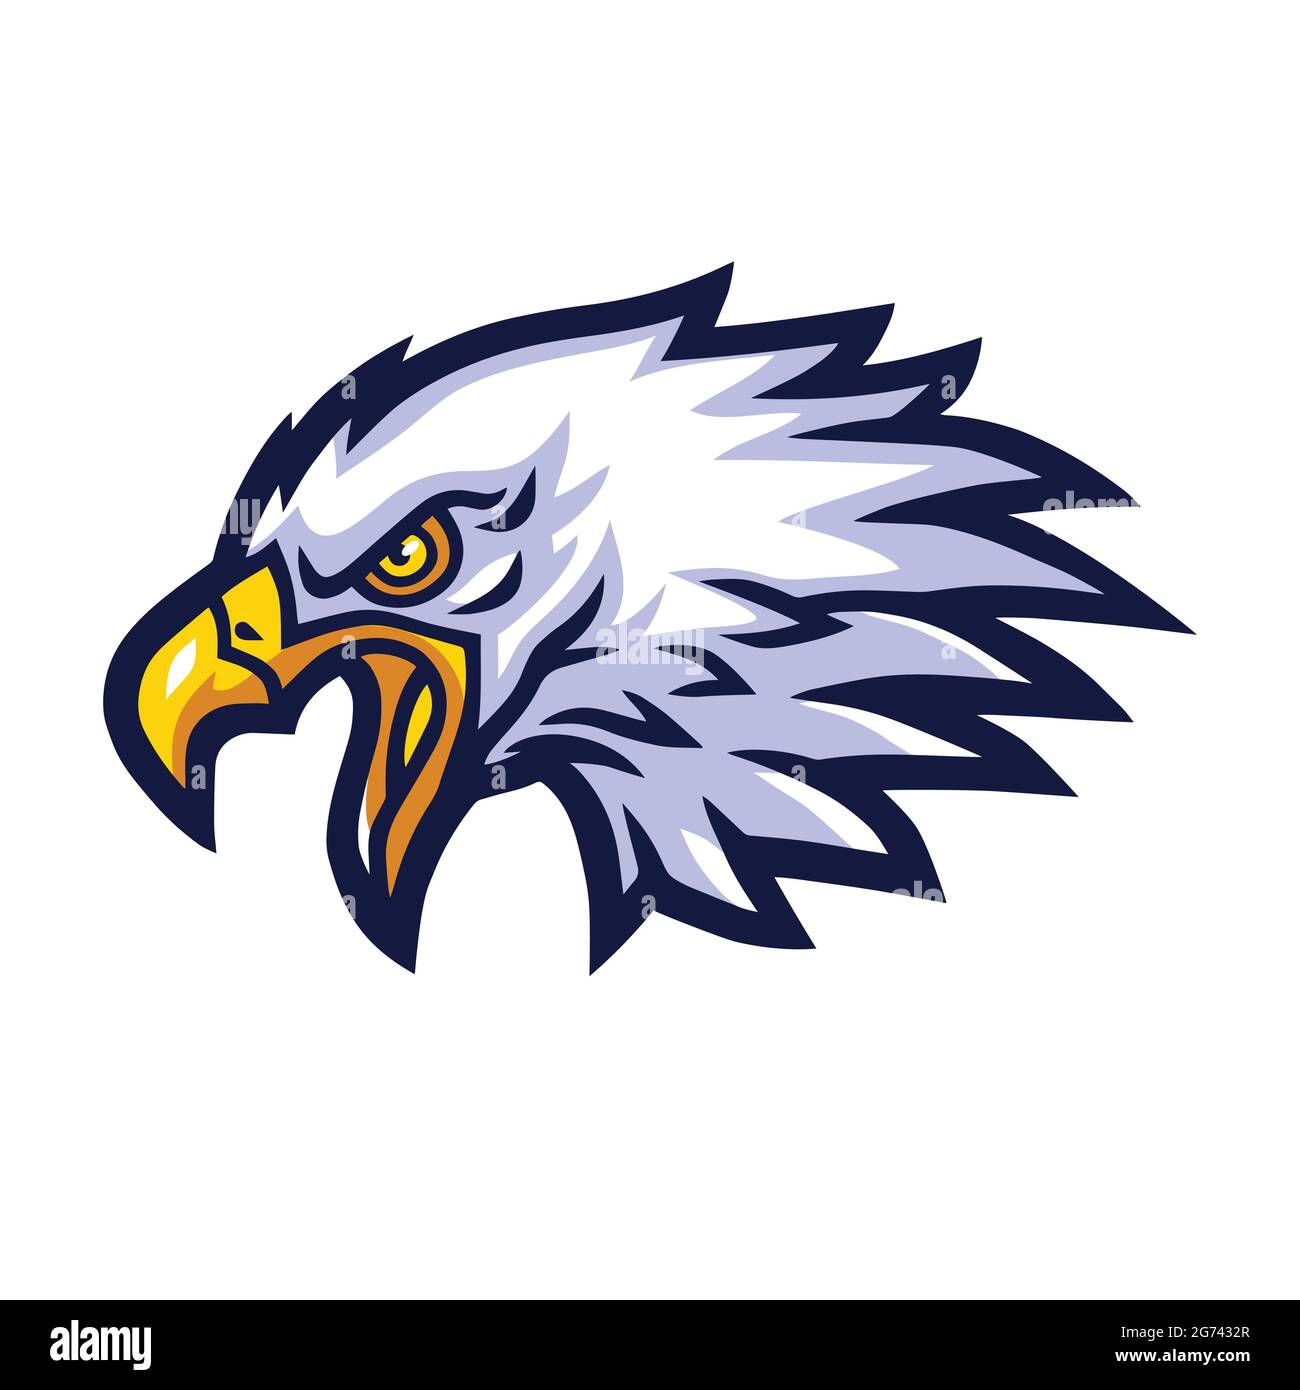 Basketball Eagle Design, Vector Format